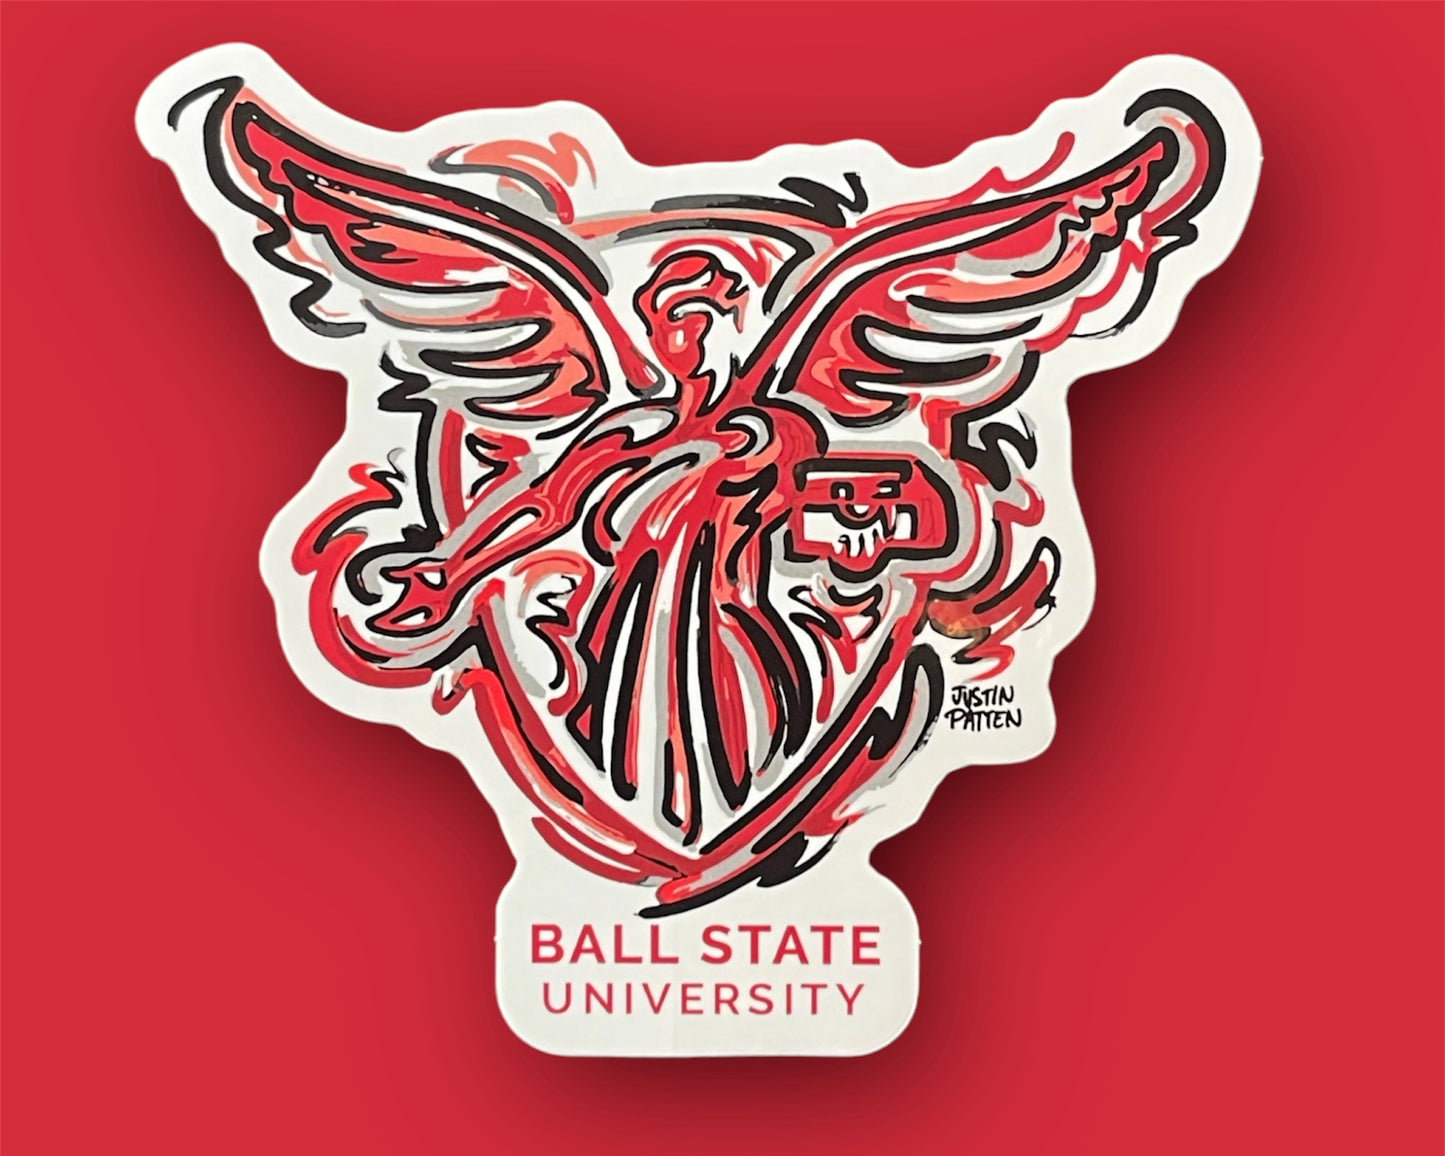 Ball State University Beneficence Statue Vinyl Sticker by Justin Patten